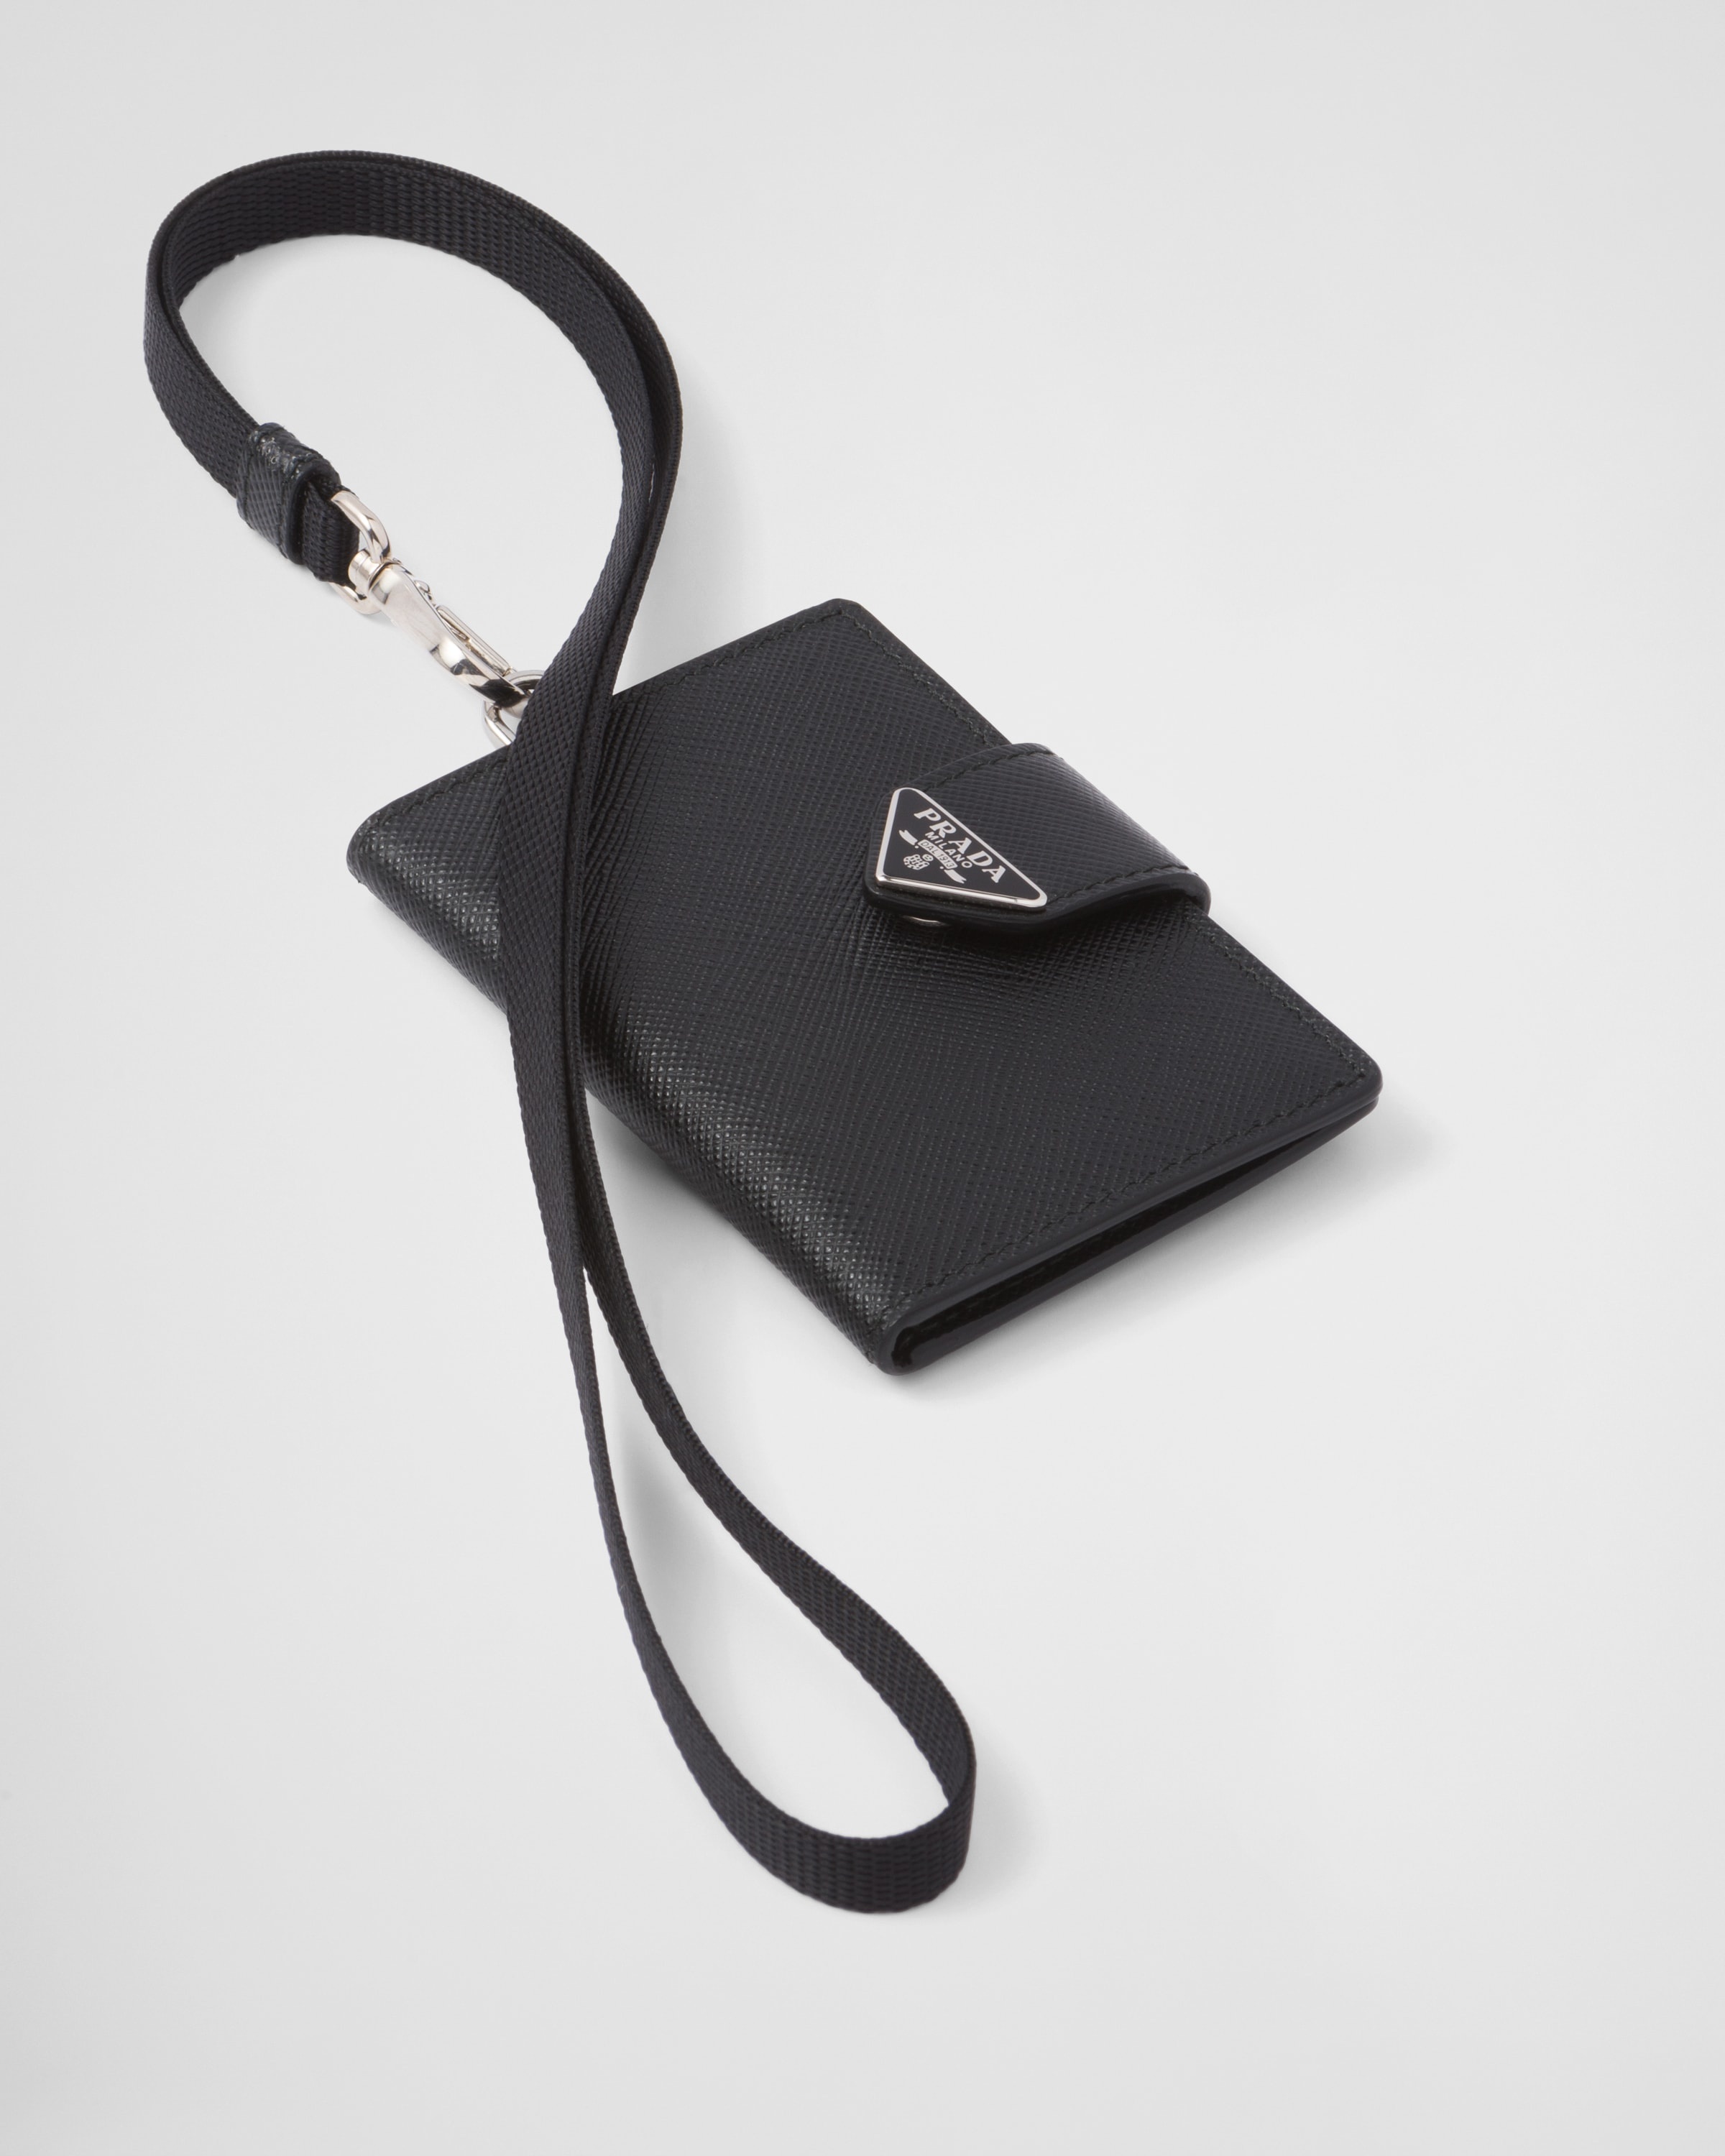 Saffiano leather card holder - 1